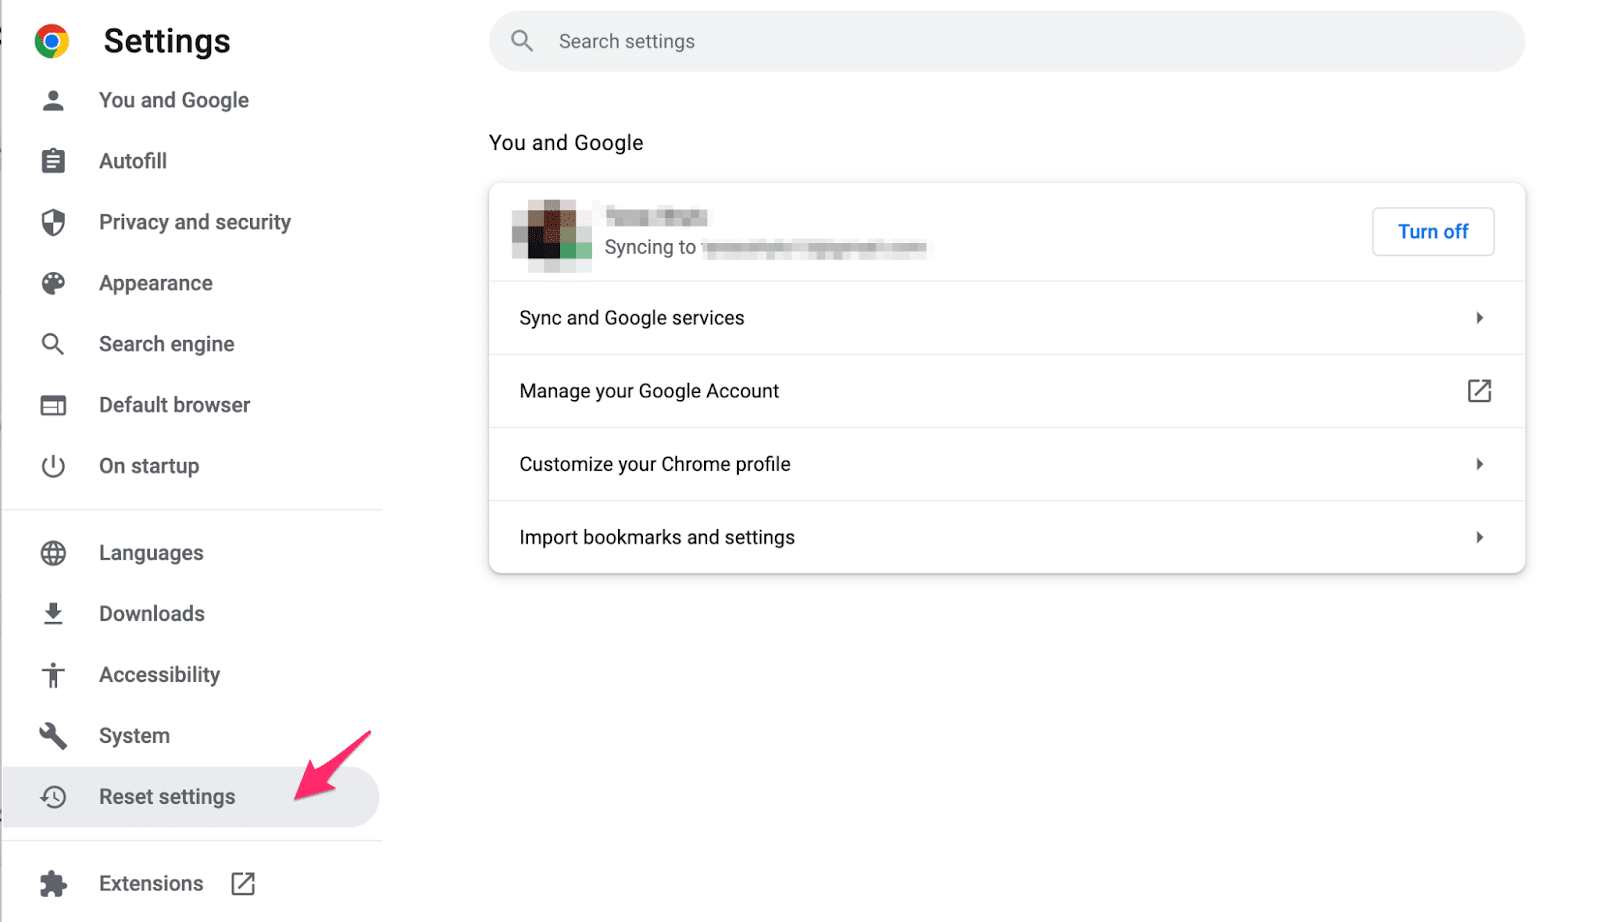 Choose the Reset settings option